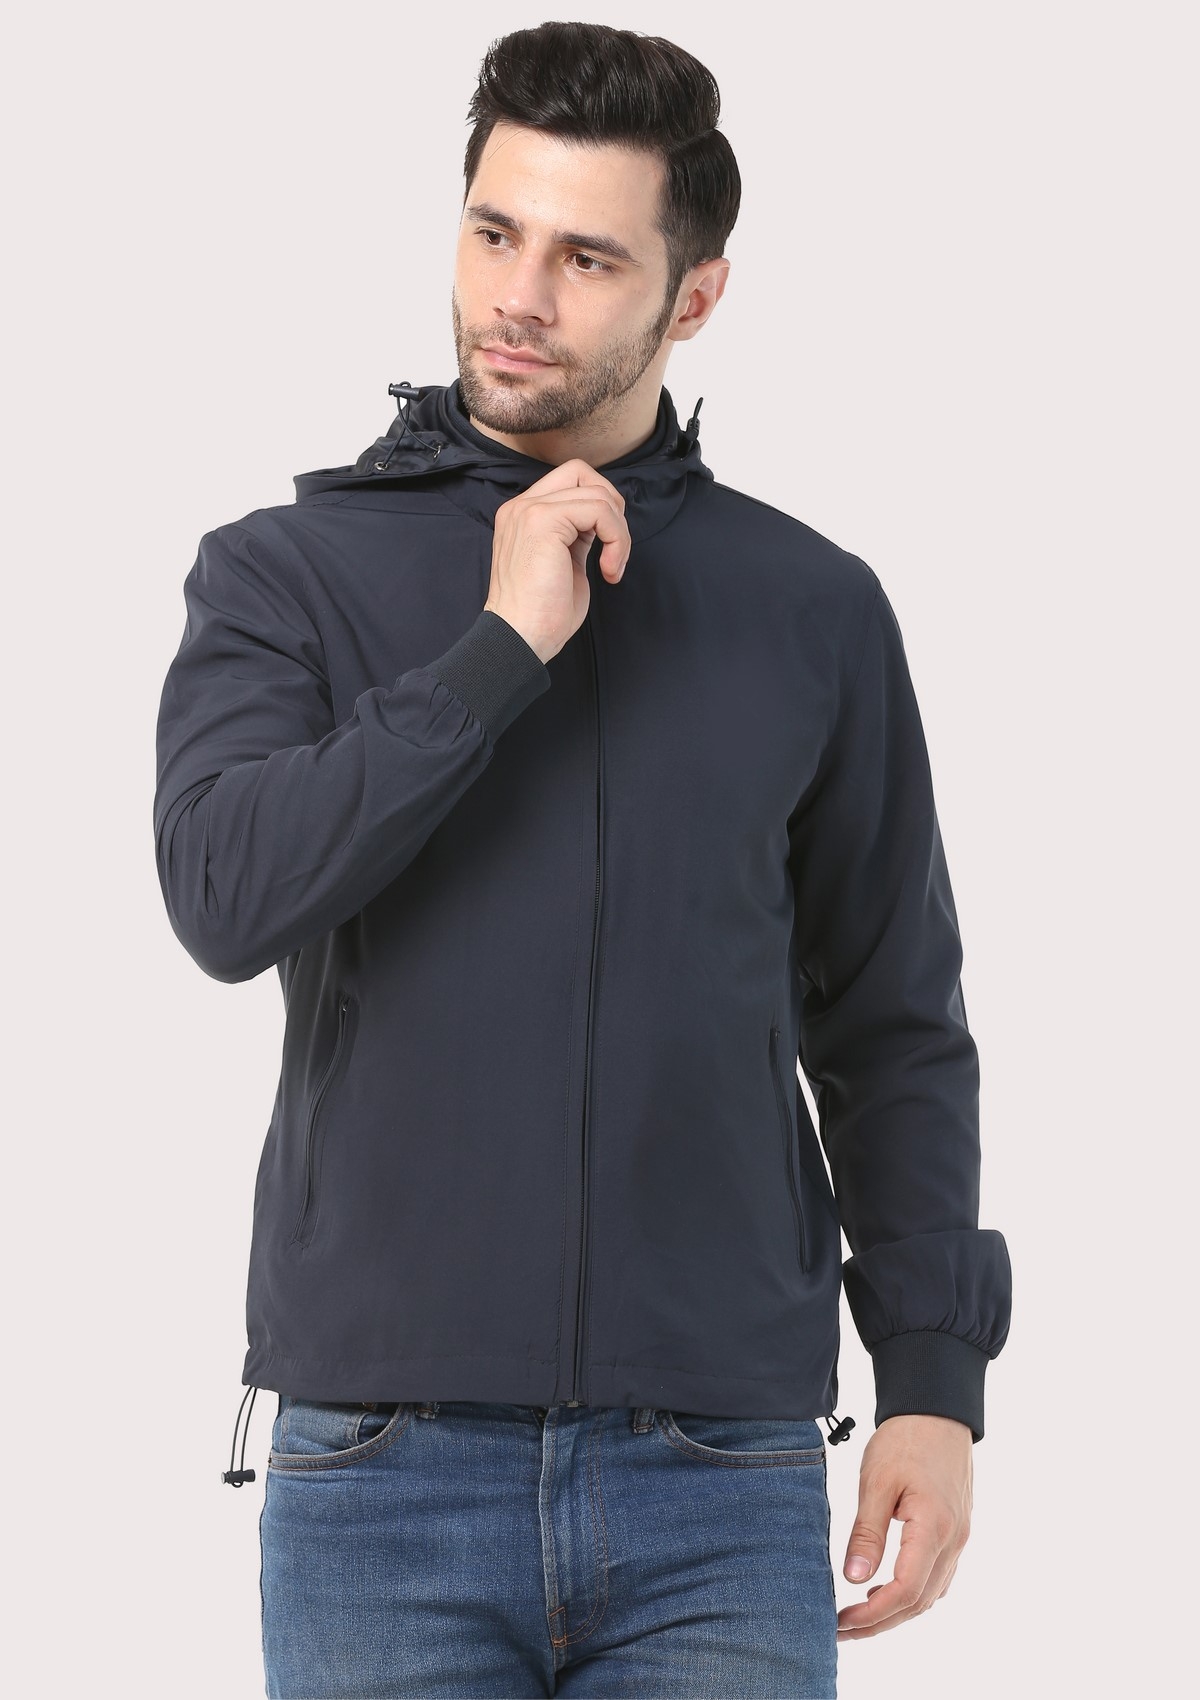 SOC Windbreaker Jacket with Adjustable Hood